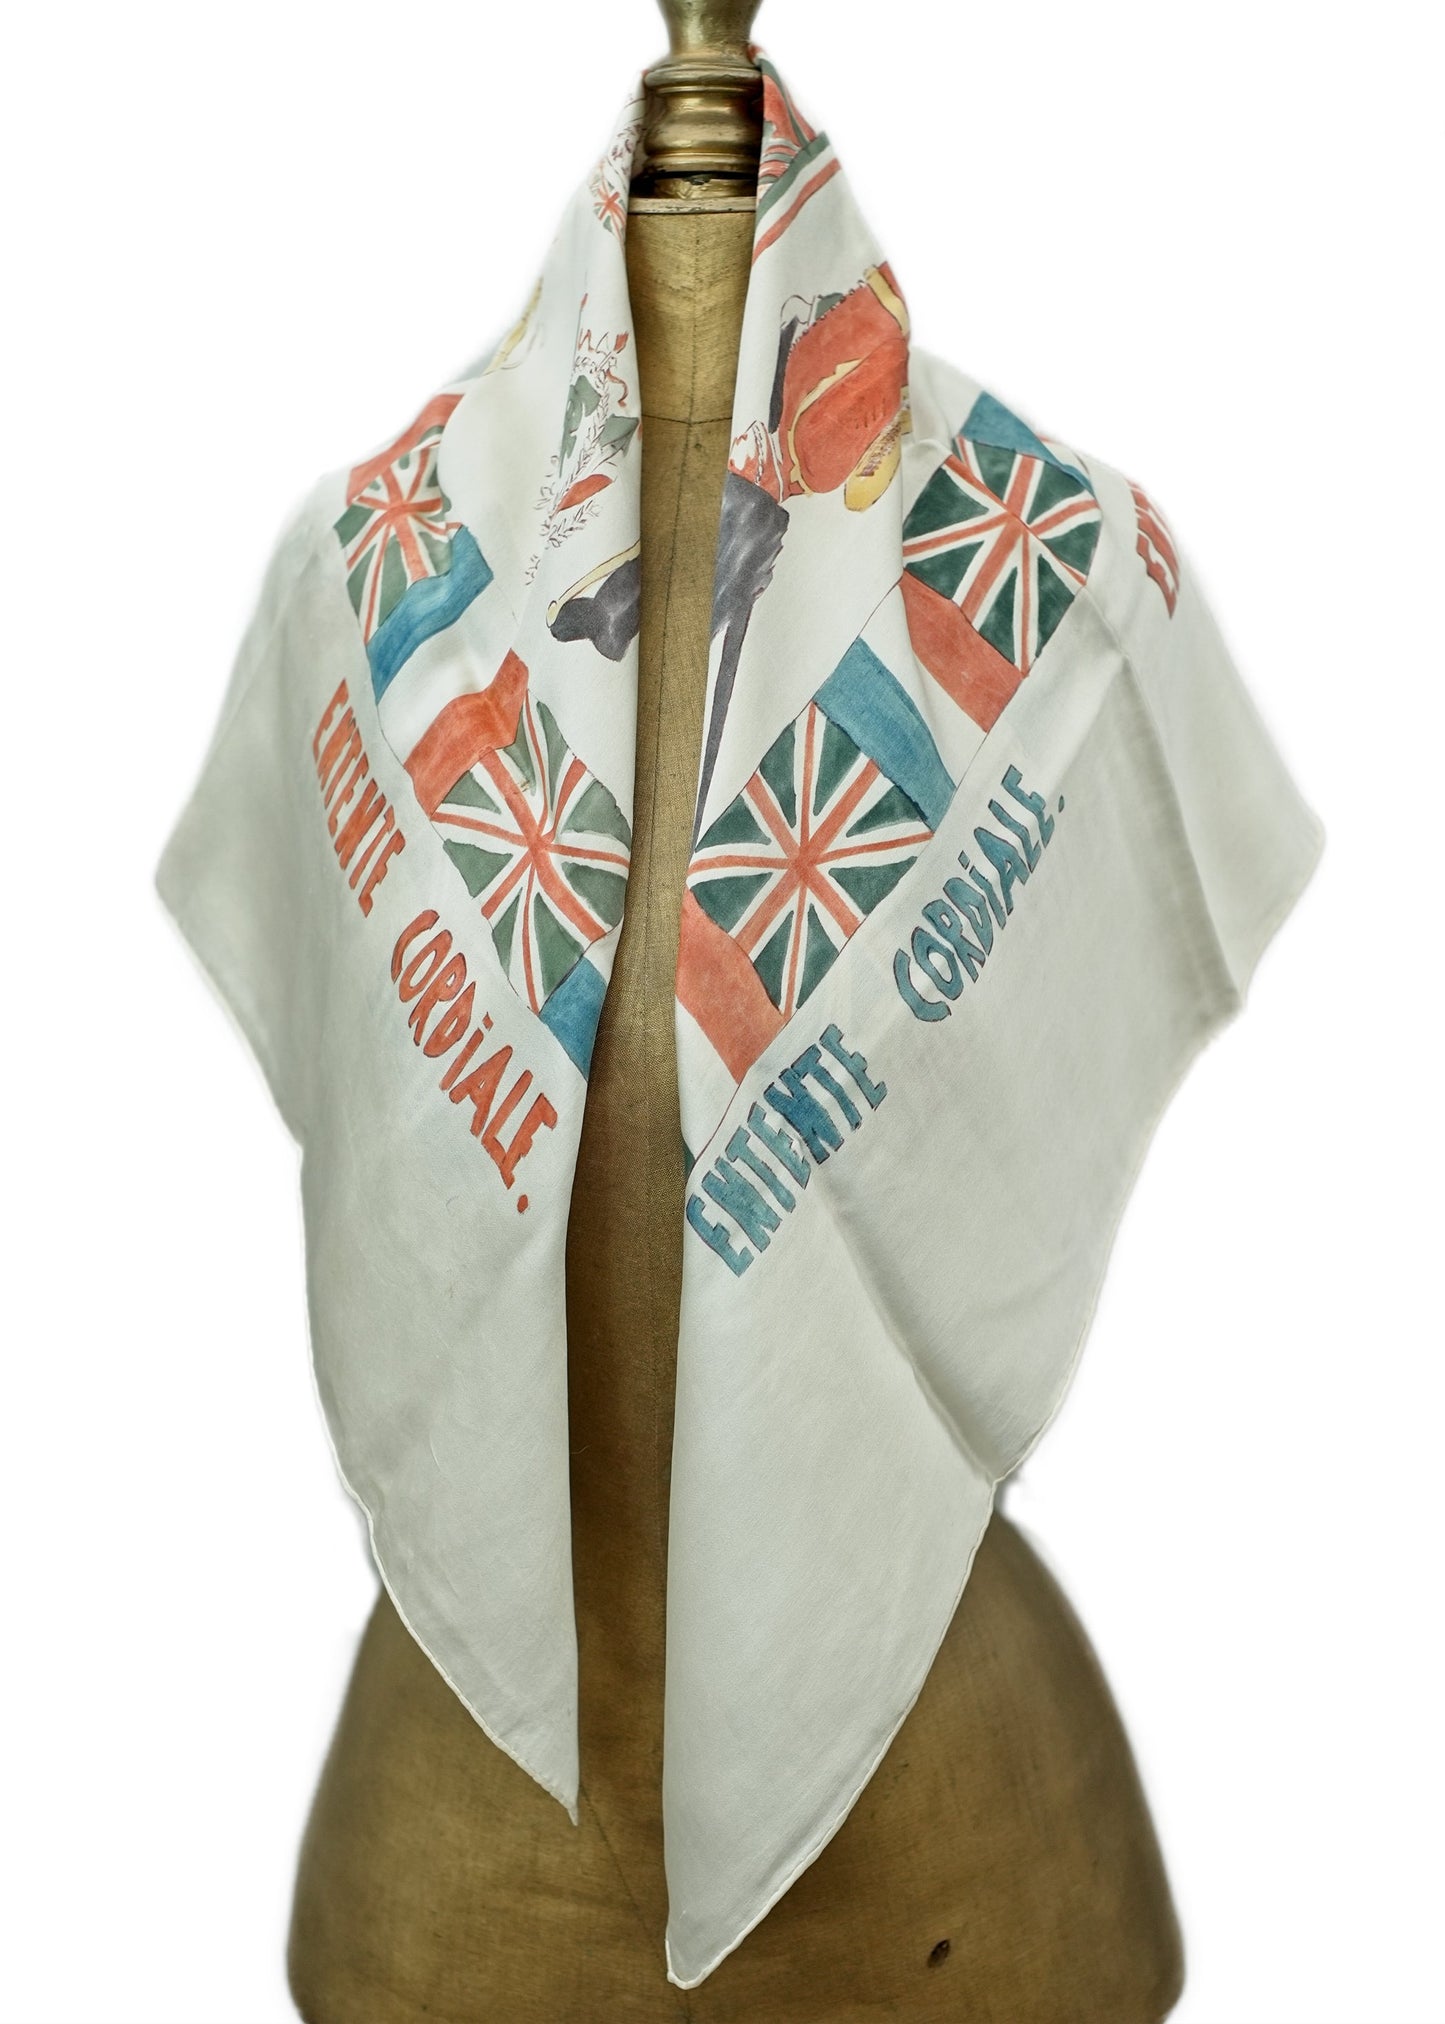 antique silk scarf depicting the entente cordiale, hand painted souvenir scarf